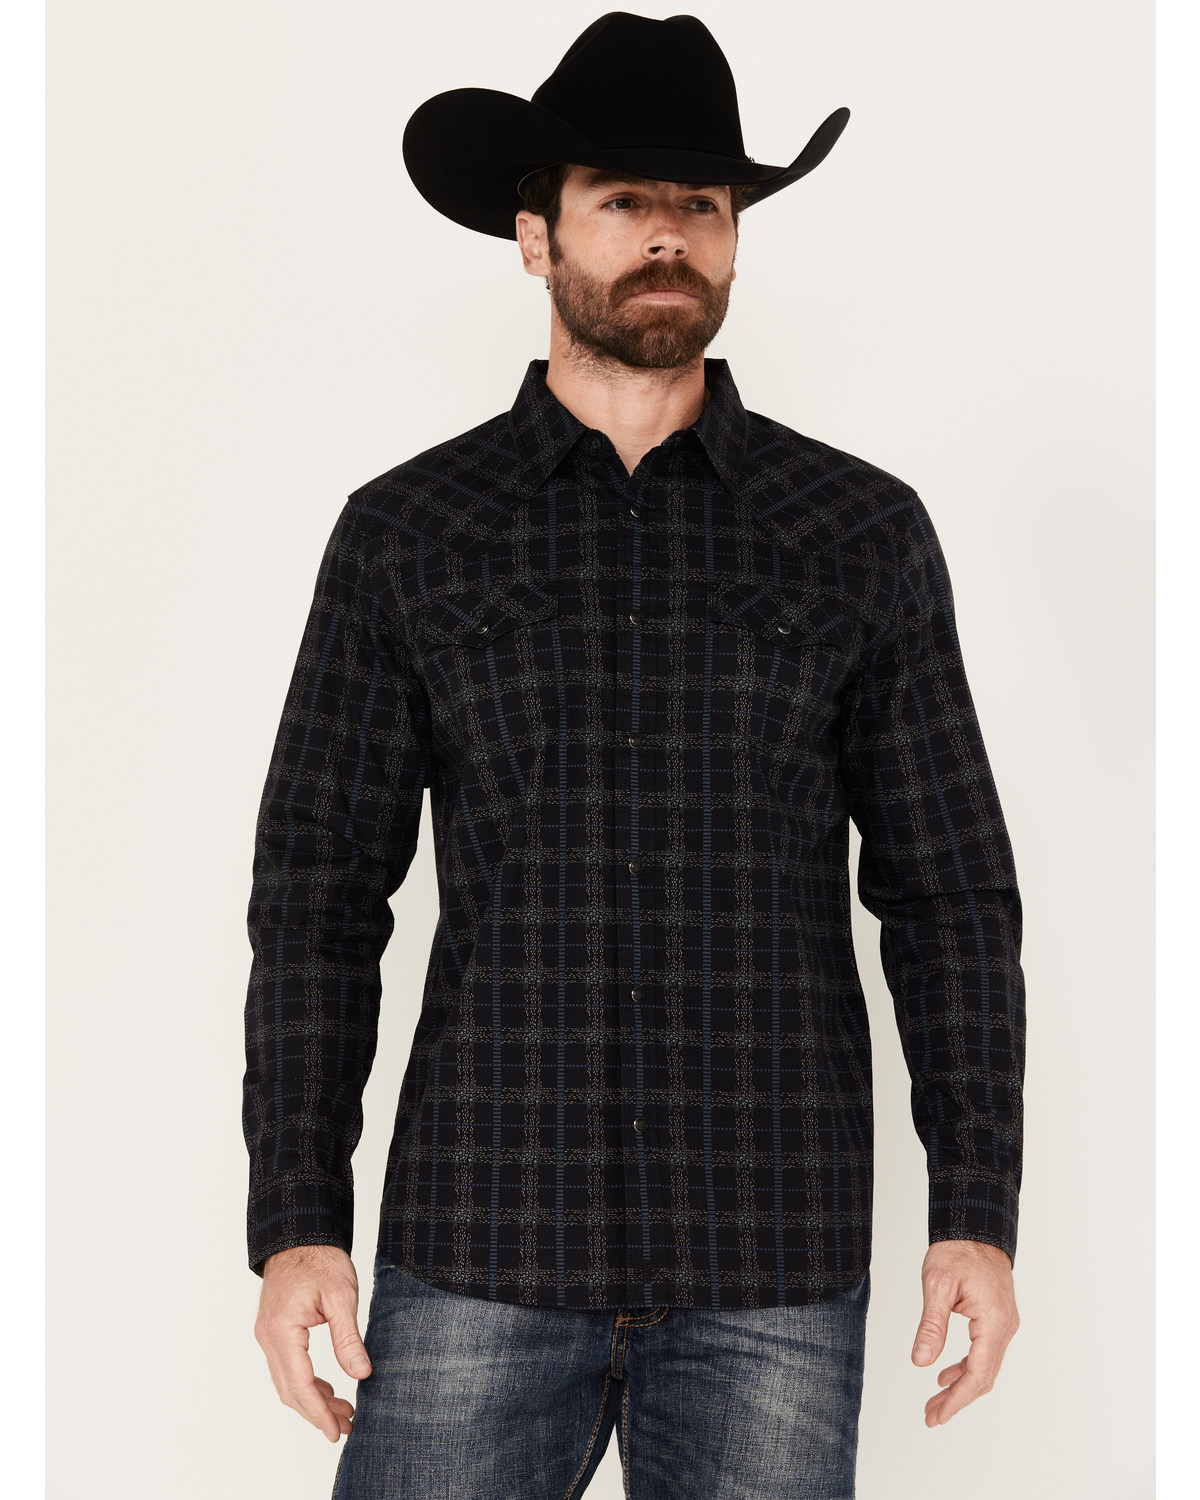 Moonshine Spirit Men's Shooting Star Plaid Print Long Sleeve Snap Western Shirt